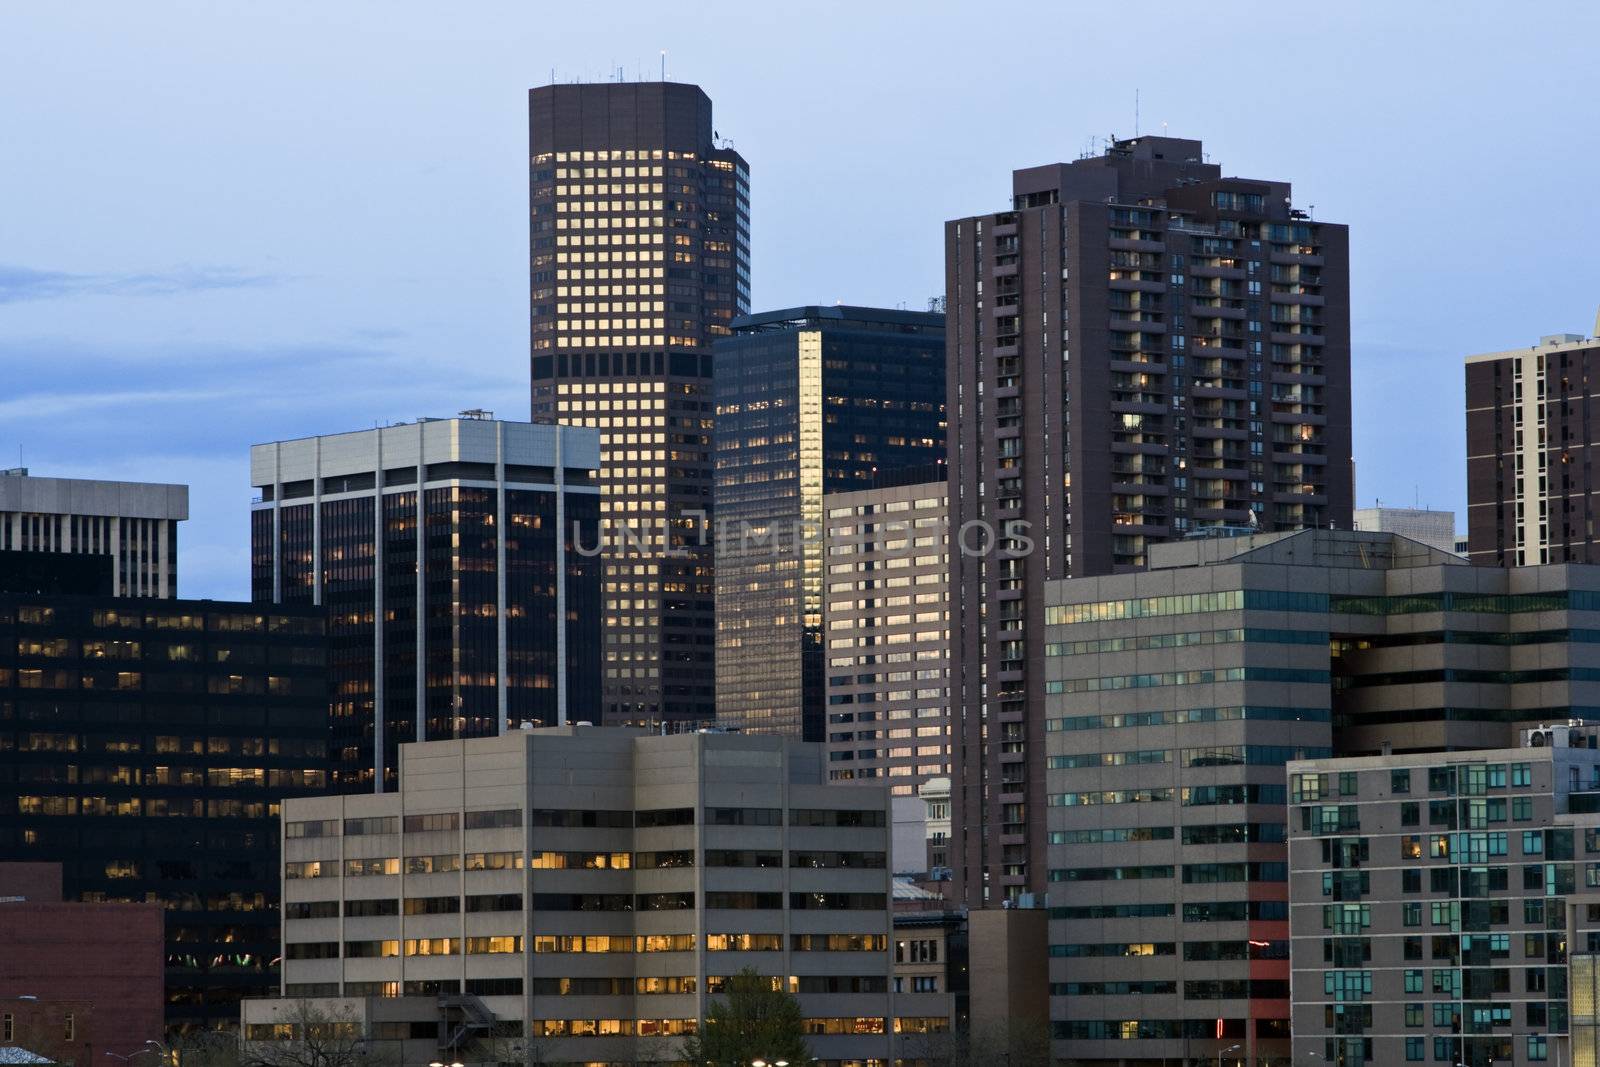 Getting dark in Denver by benkrut